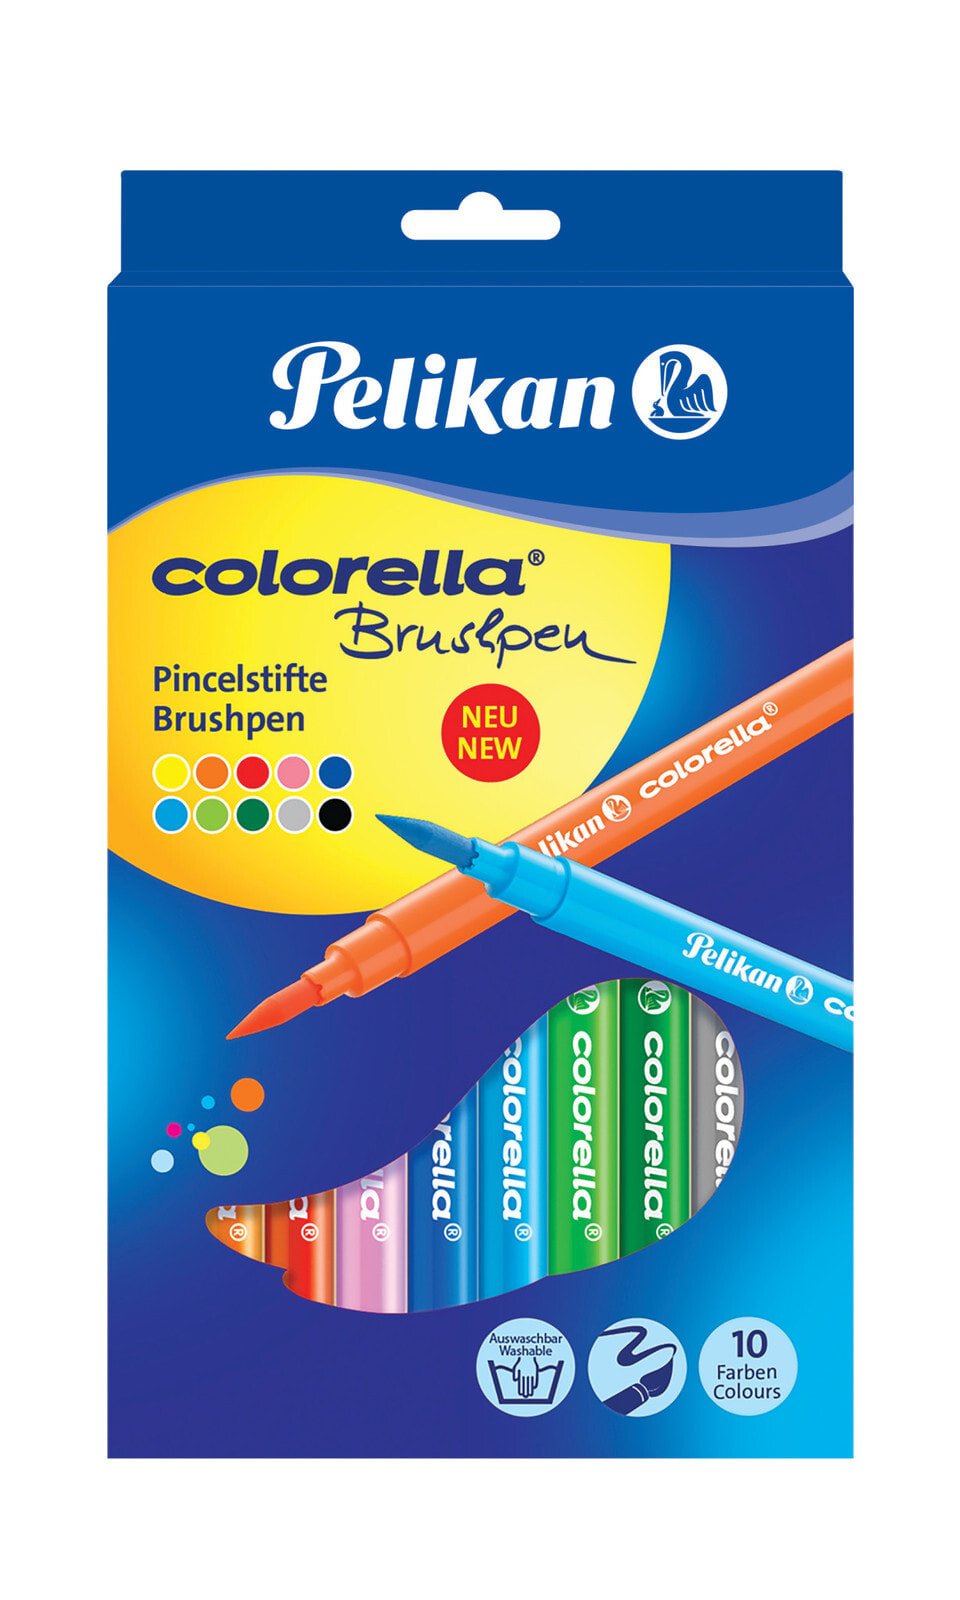 Pelikan Colorella Brushpen капиллярная ручка Разноцветный 10 шт 814577